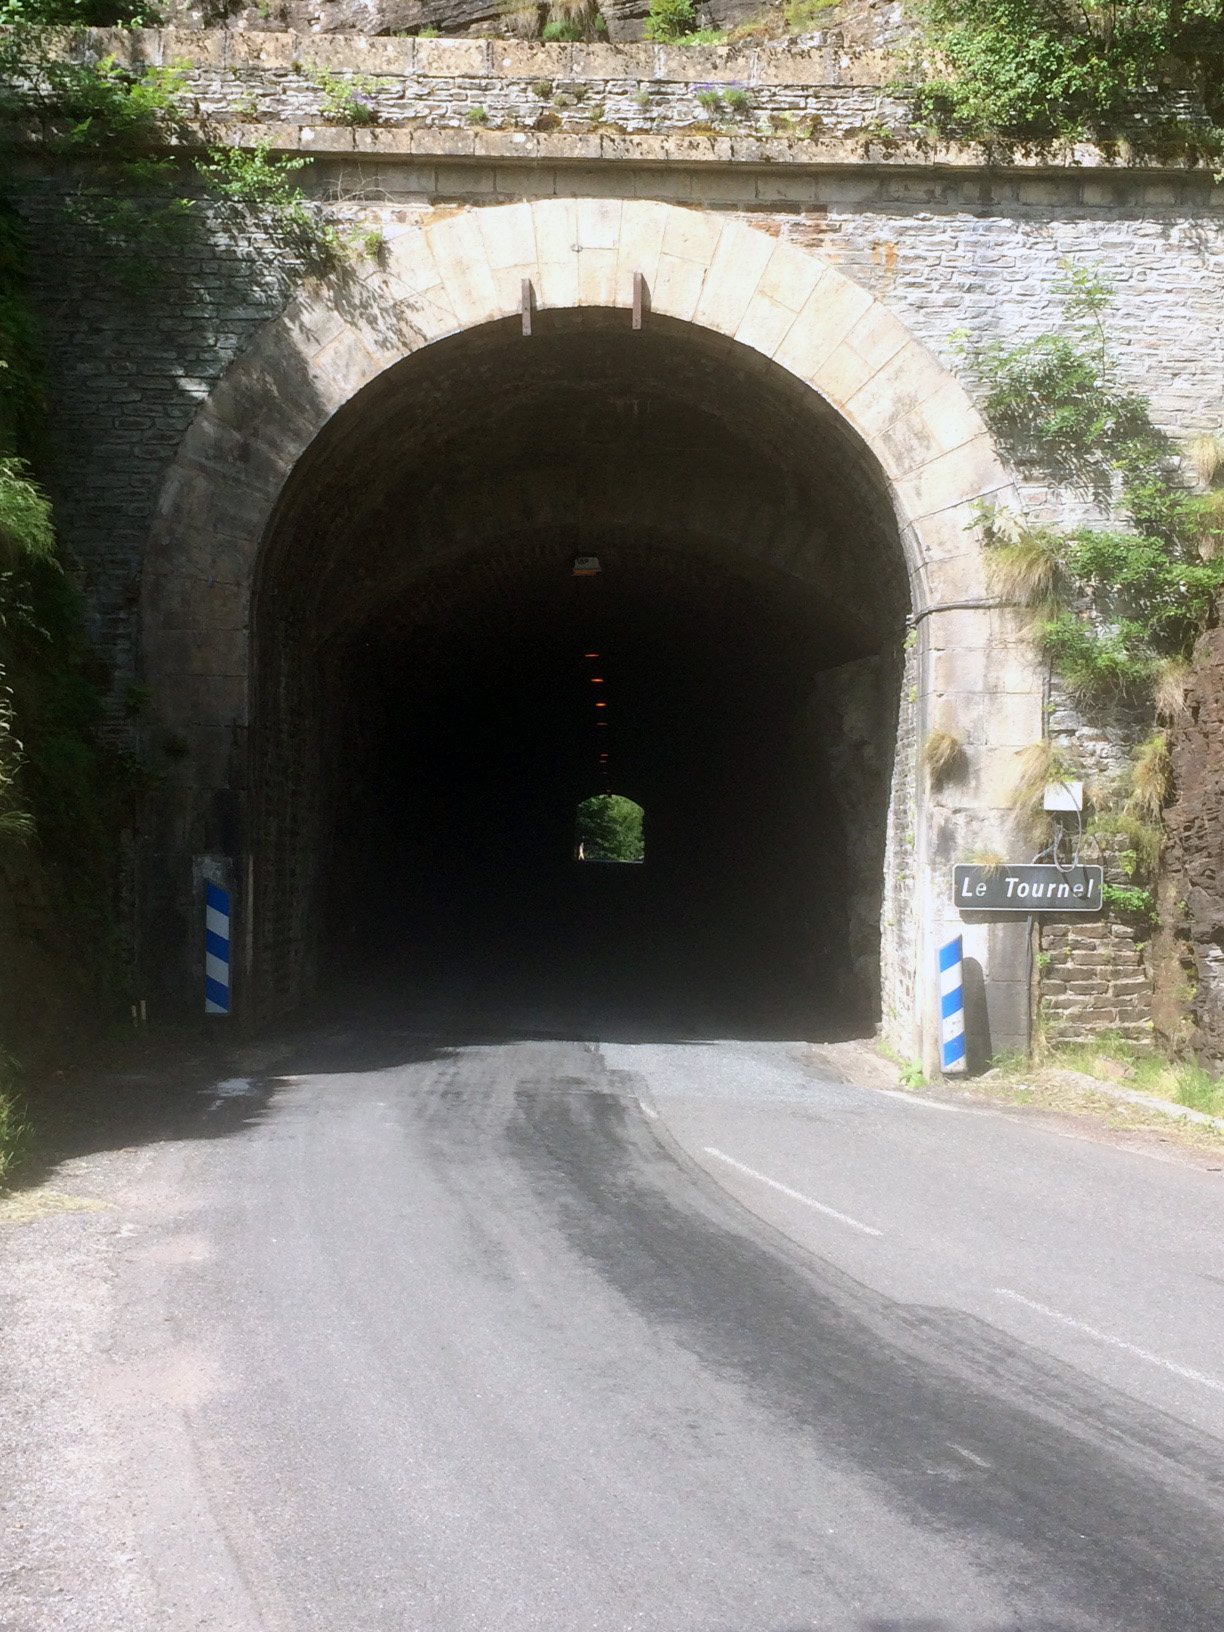 Our first tunnel beneath le chateaux de tournel